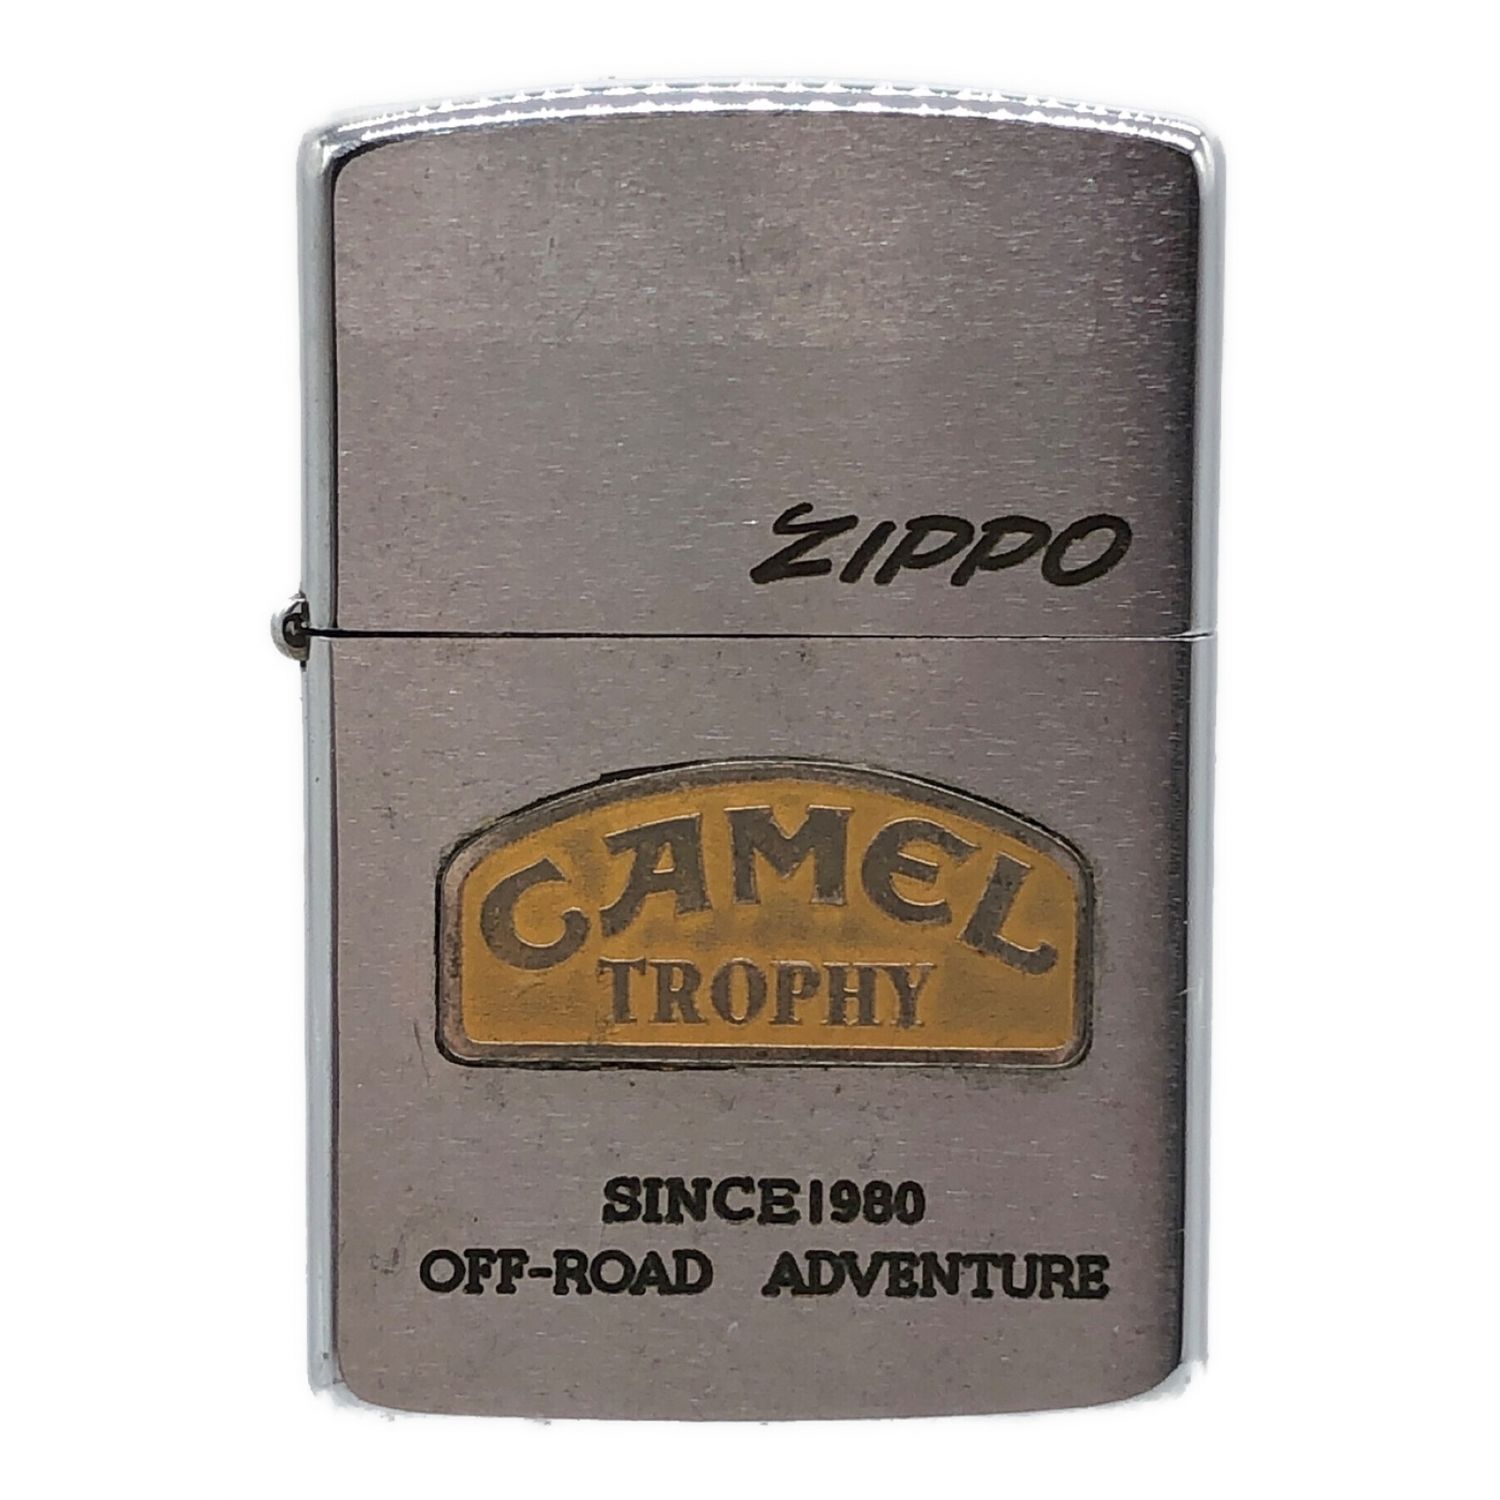 NEW売り切れる前に☆ ジッポー ZIPPO CAMEL TROPHY 1995年製